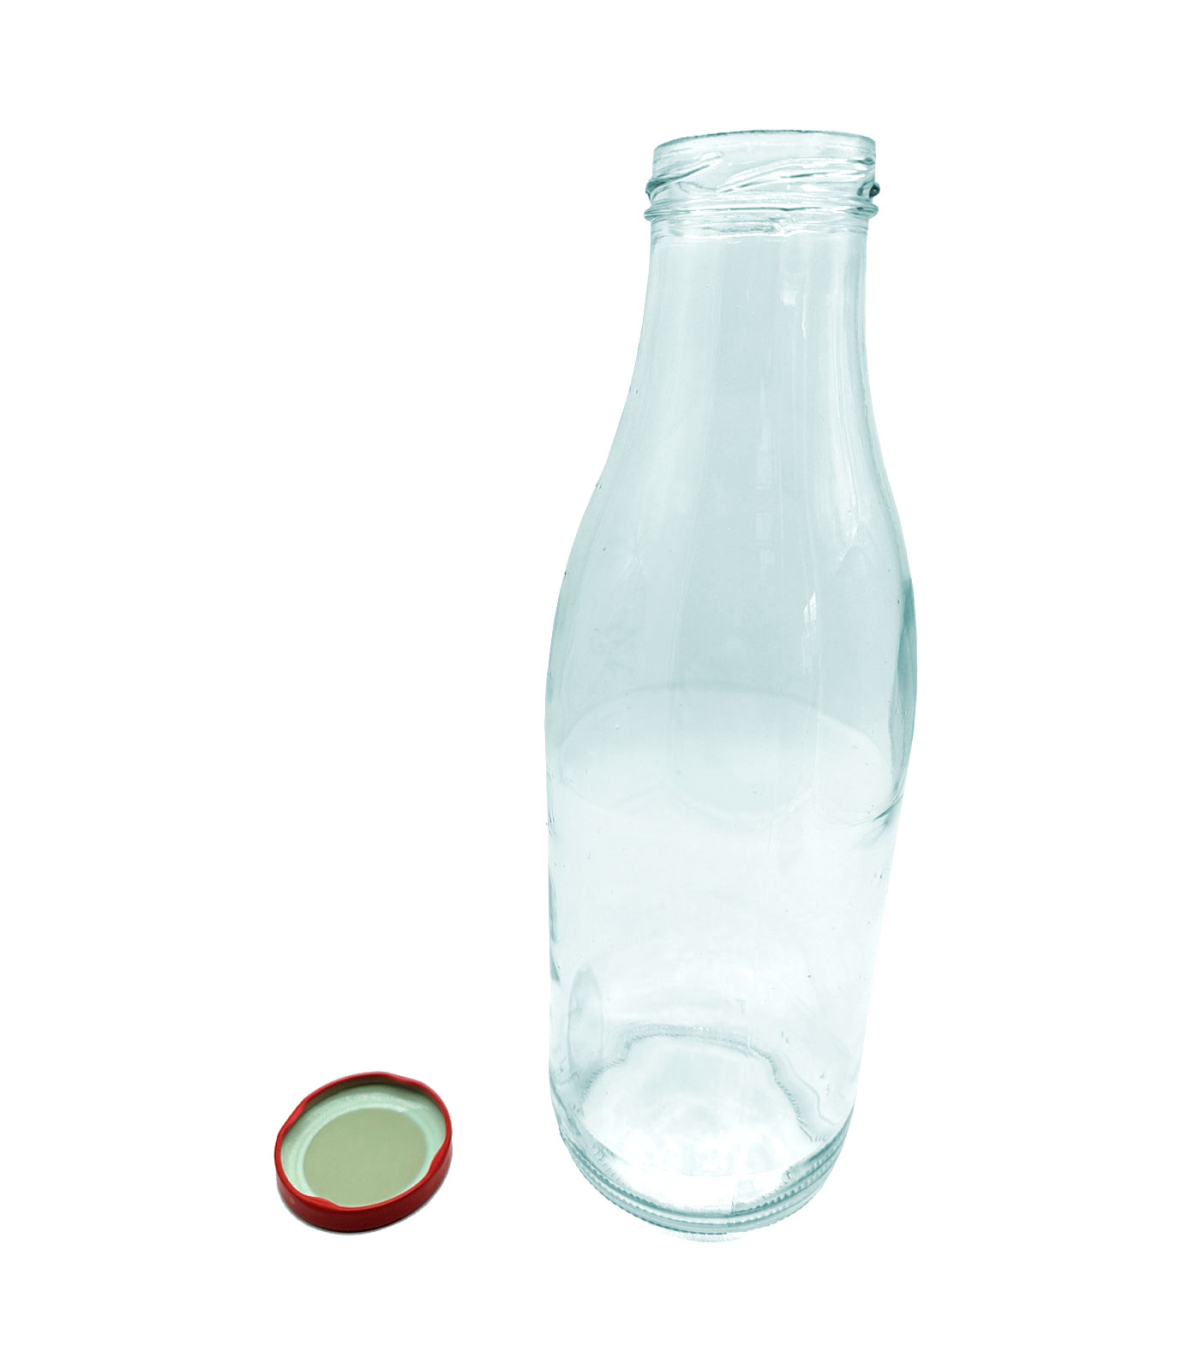 Botella Vidrio Colores Tapa Rosca 1 Litro Bebidas Hogar